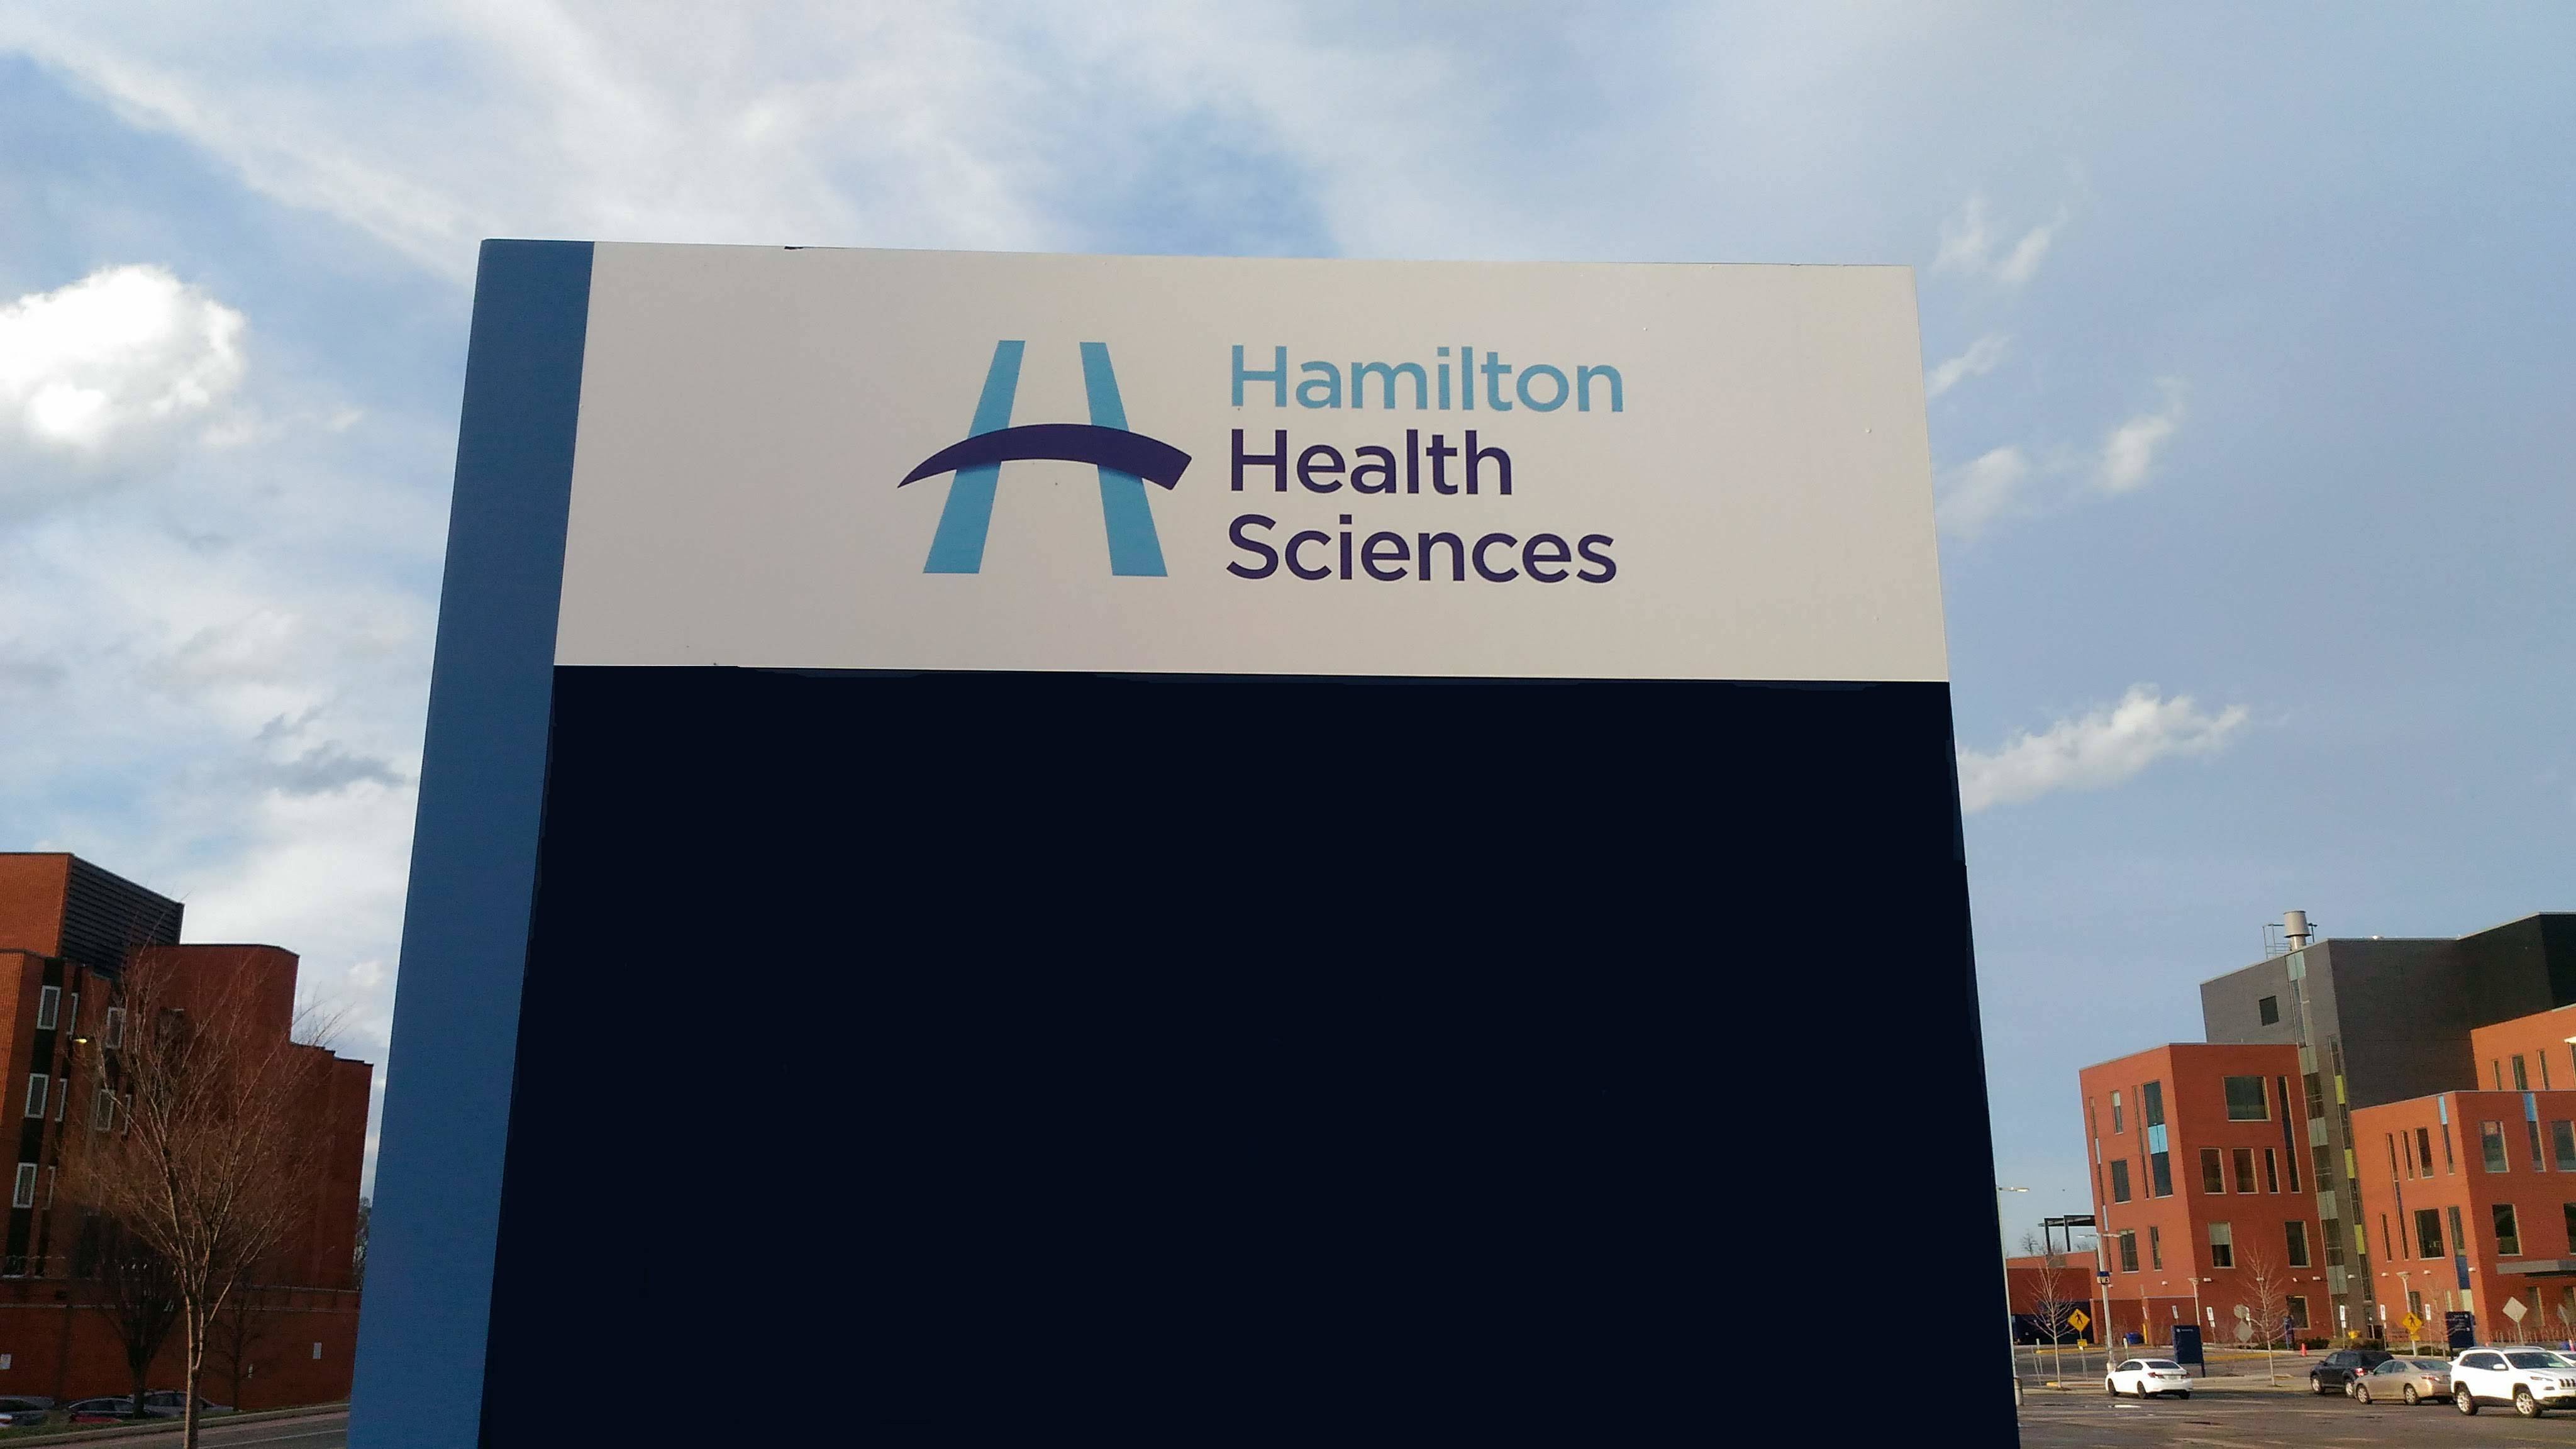 Juravinski Cancer Centre - Hamilton Health Sciences